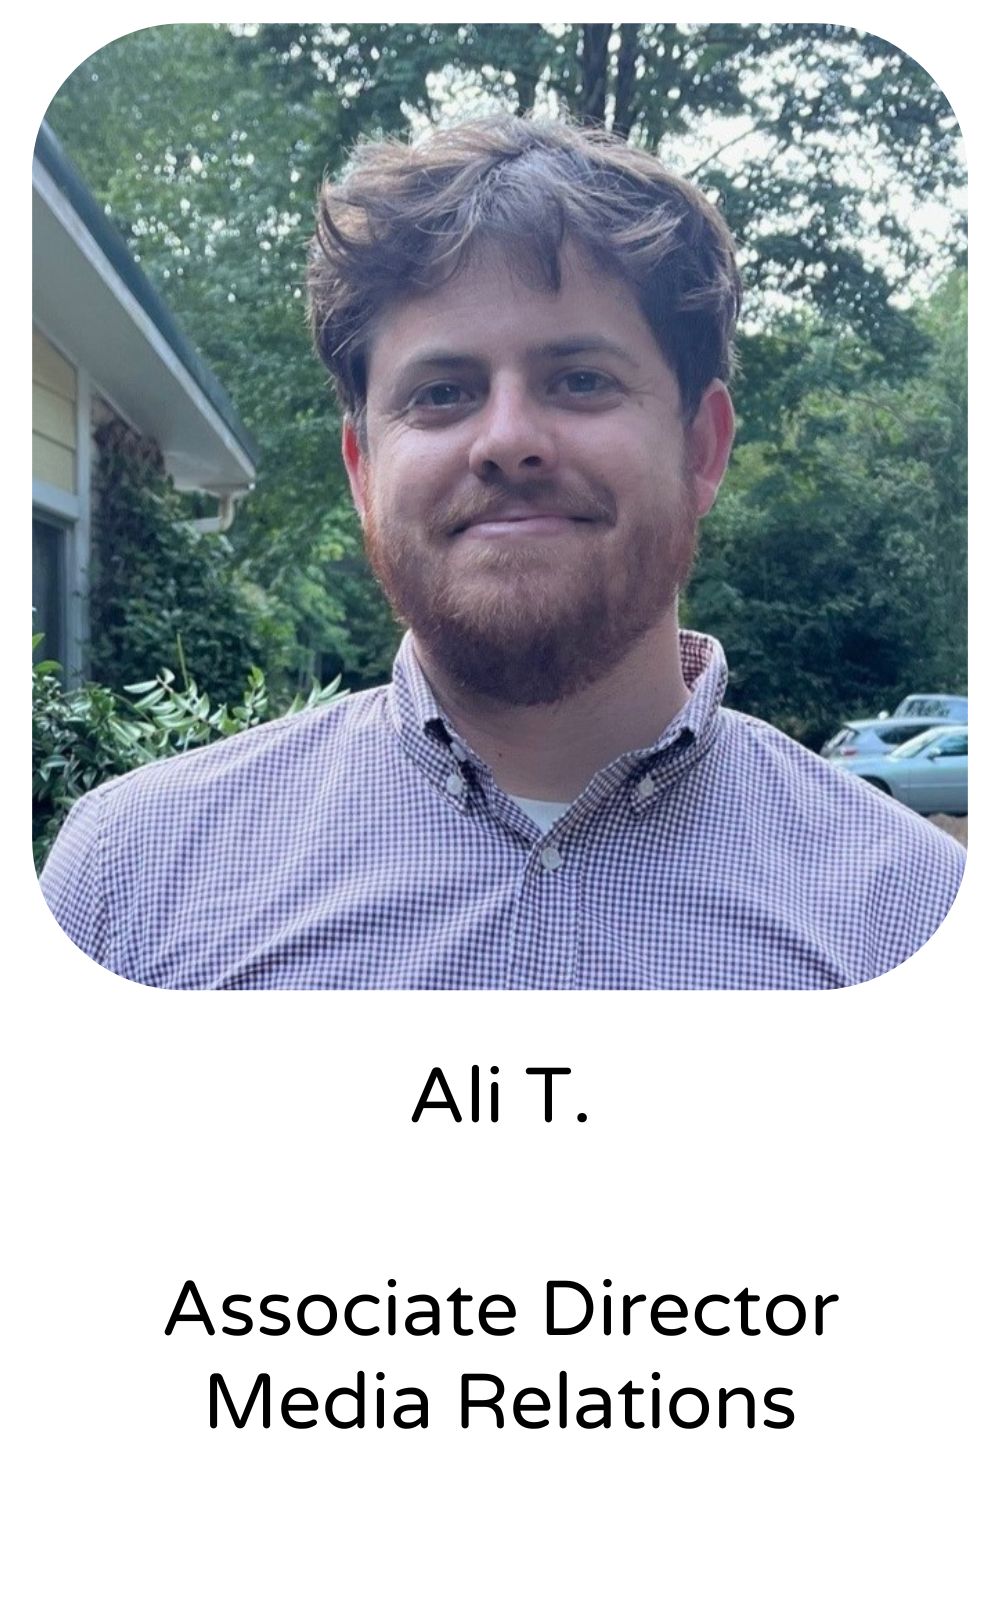 Ali T., Associate Director, Media Relations